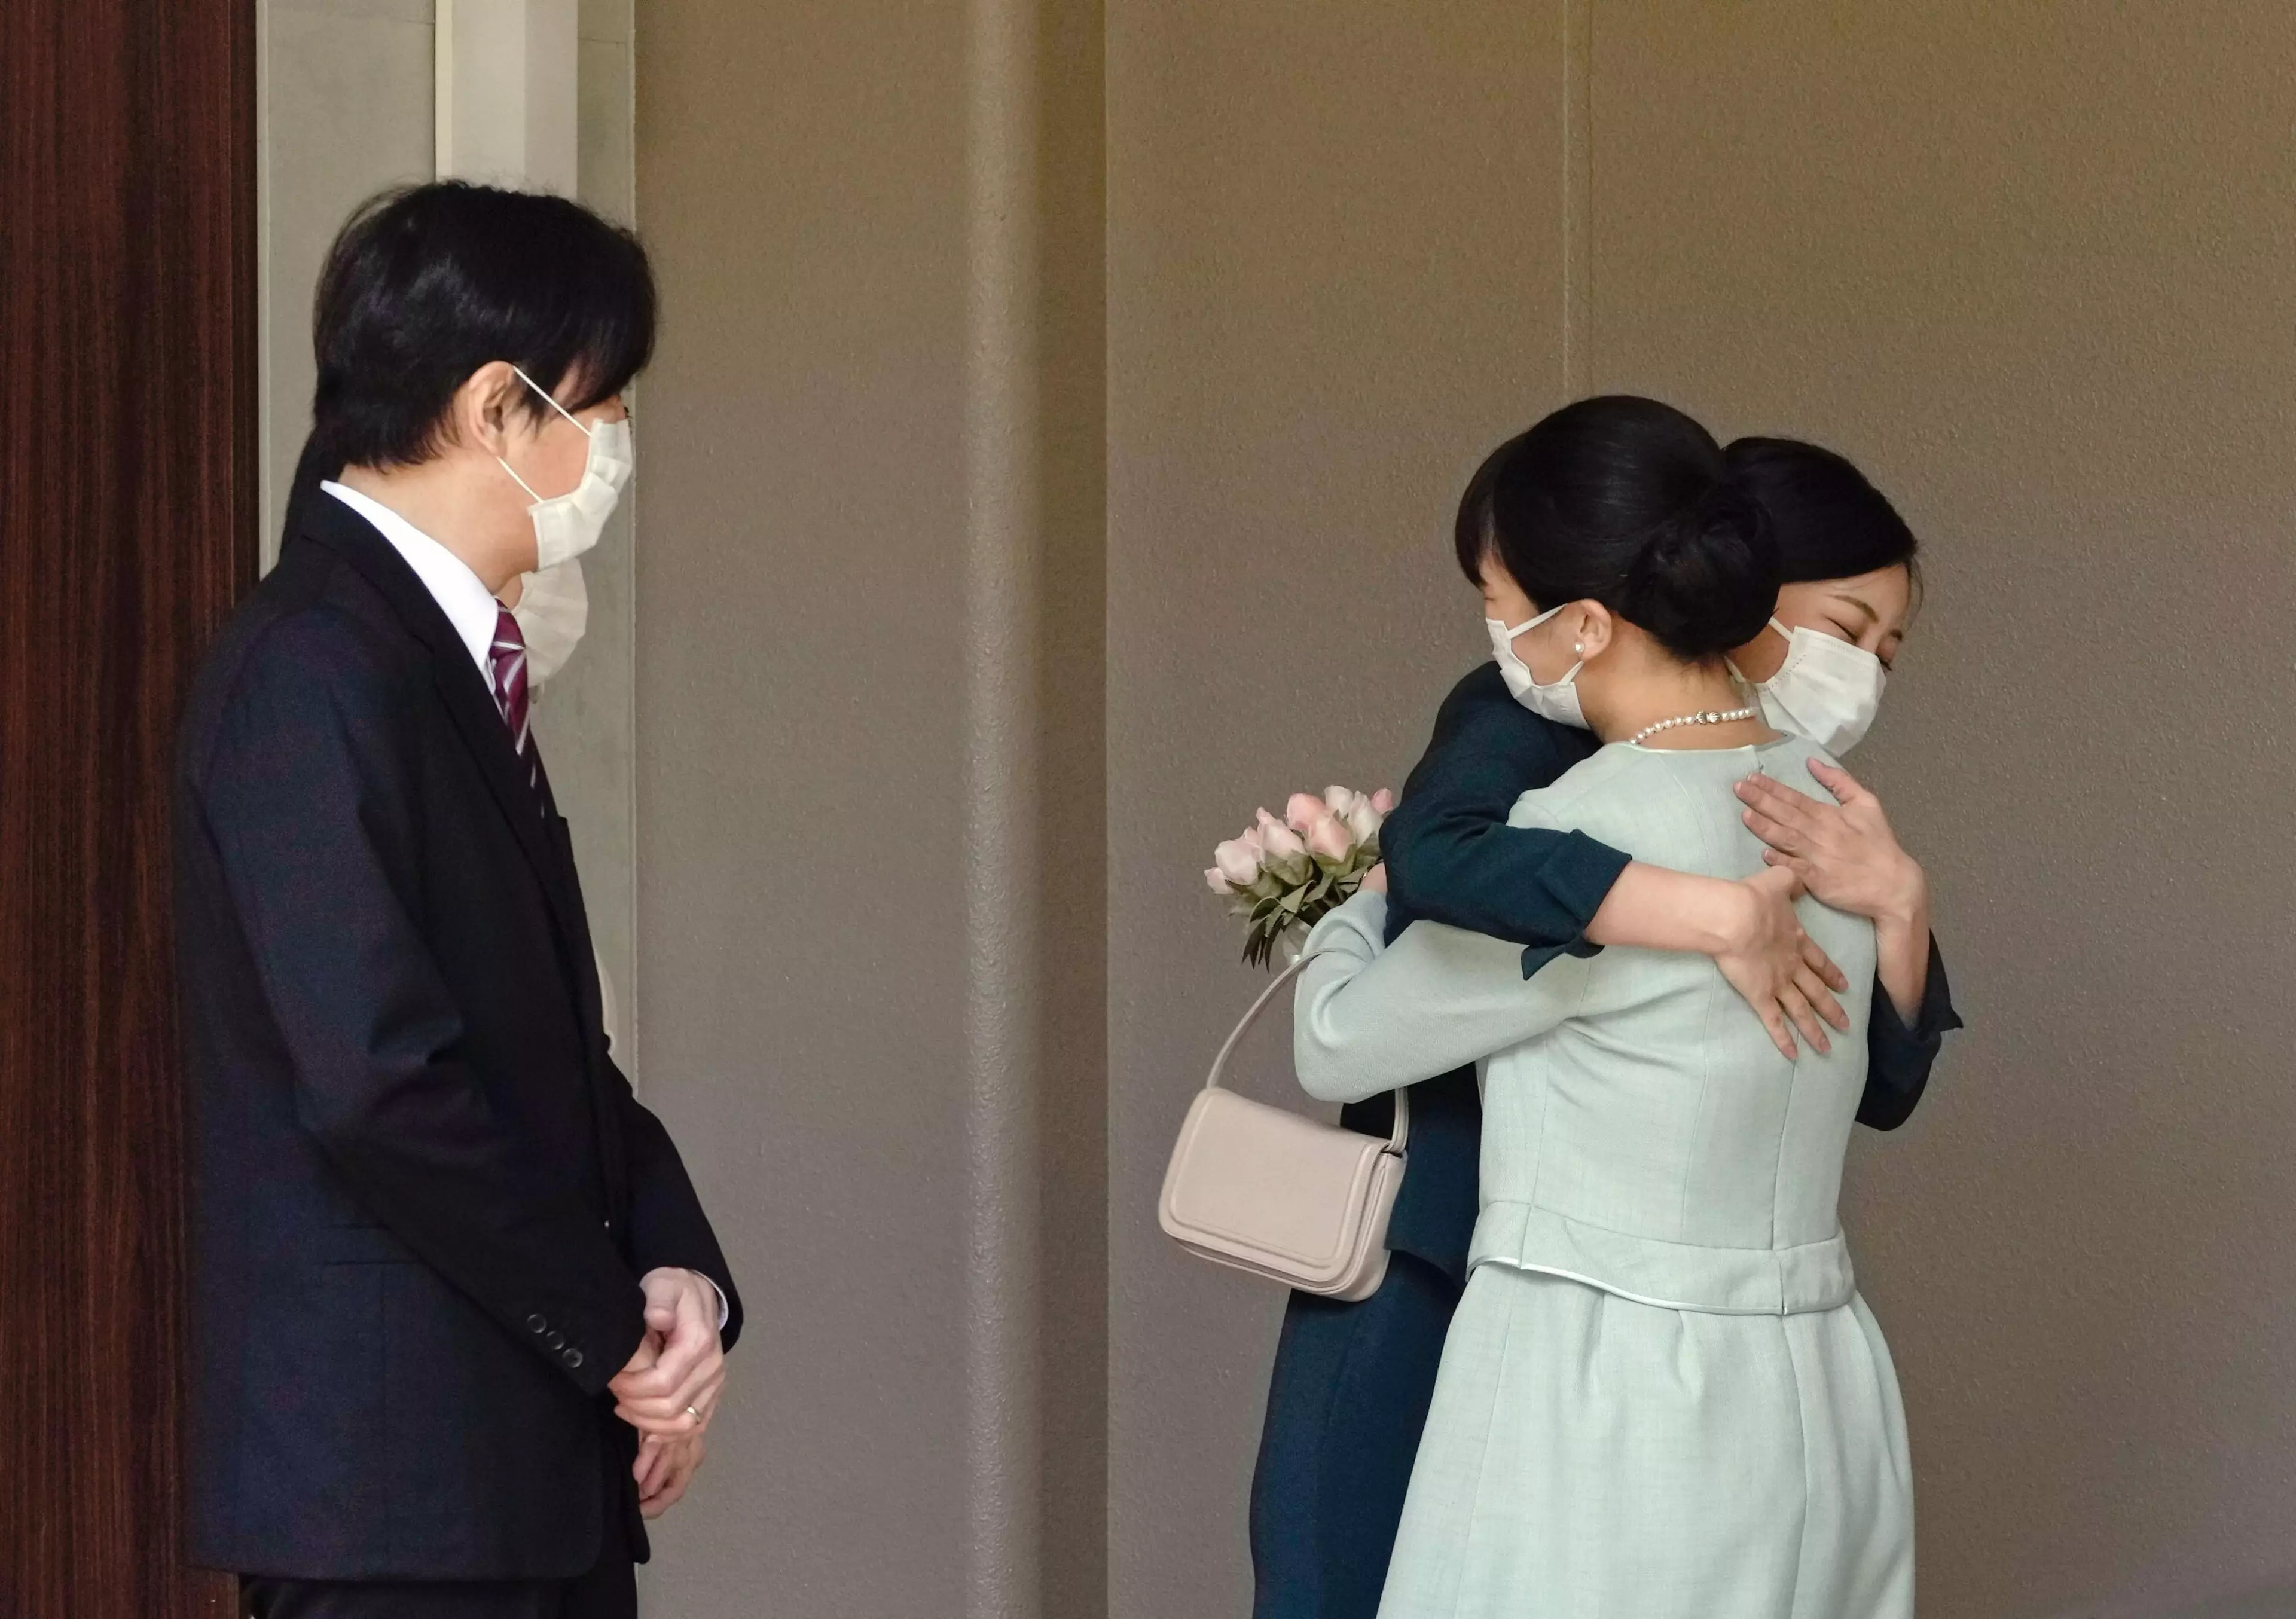 Princess Mako hugs her sister as she leaves the royal household.